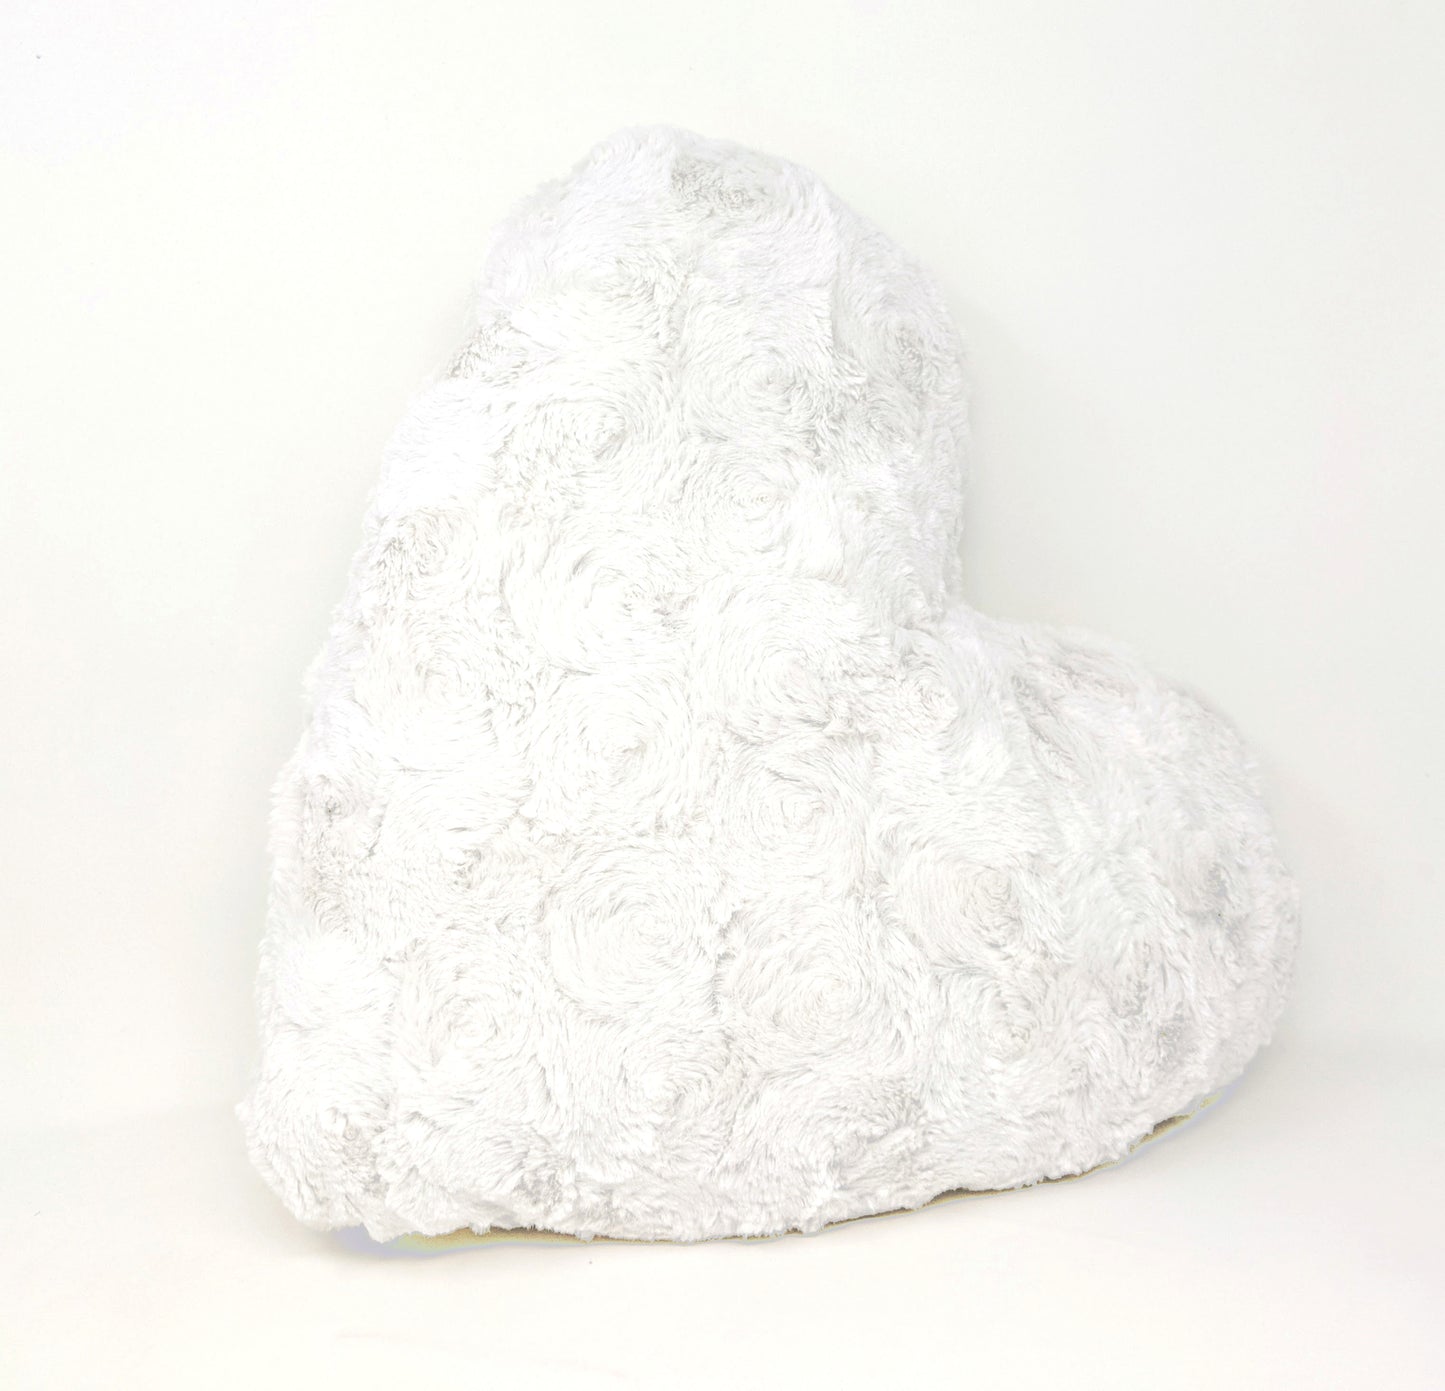 White Luxury Roses Romantic Valentine Plush Heart Shaped Throw Pillow - 16” x 14” (K11)